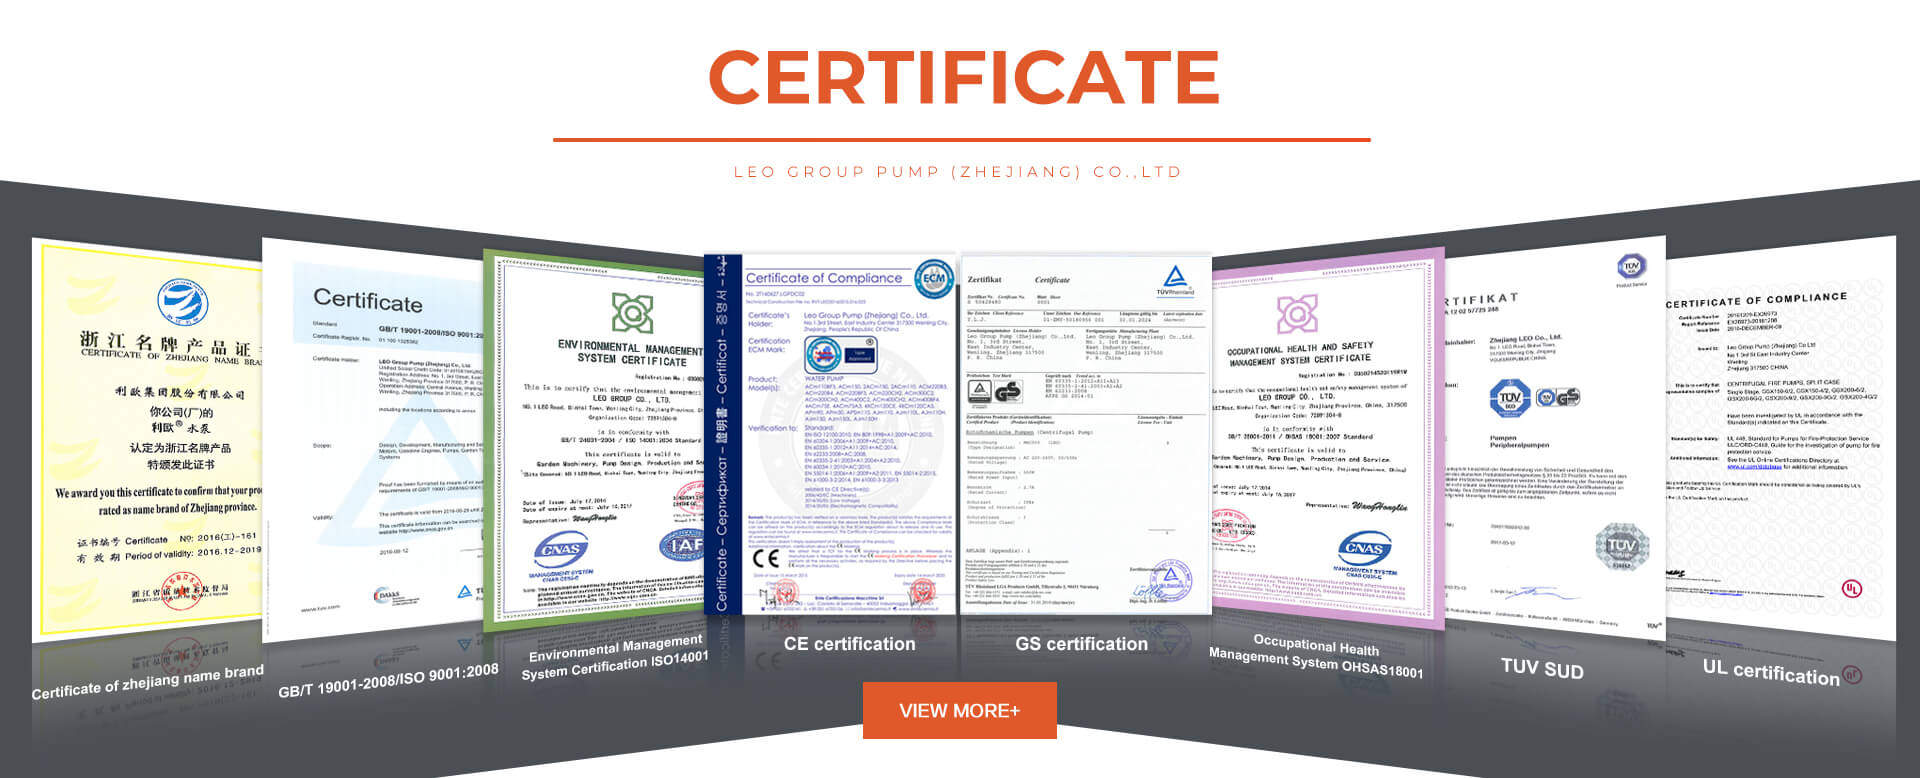 Authoritative Accreditation Standards & Certificates